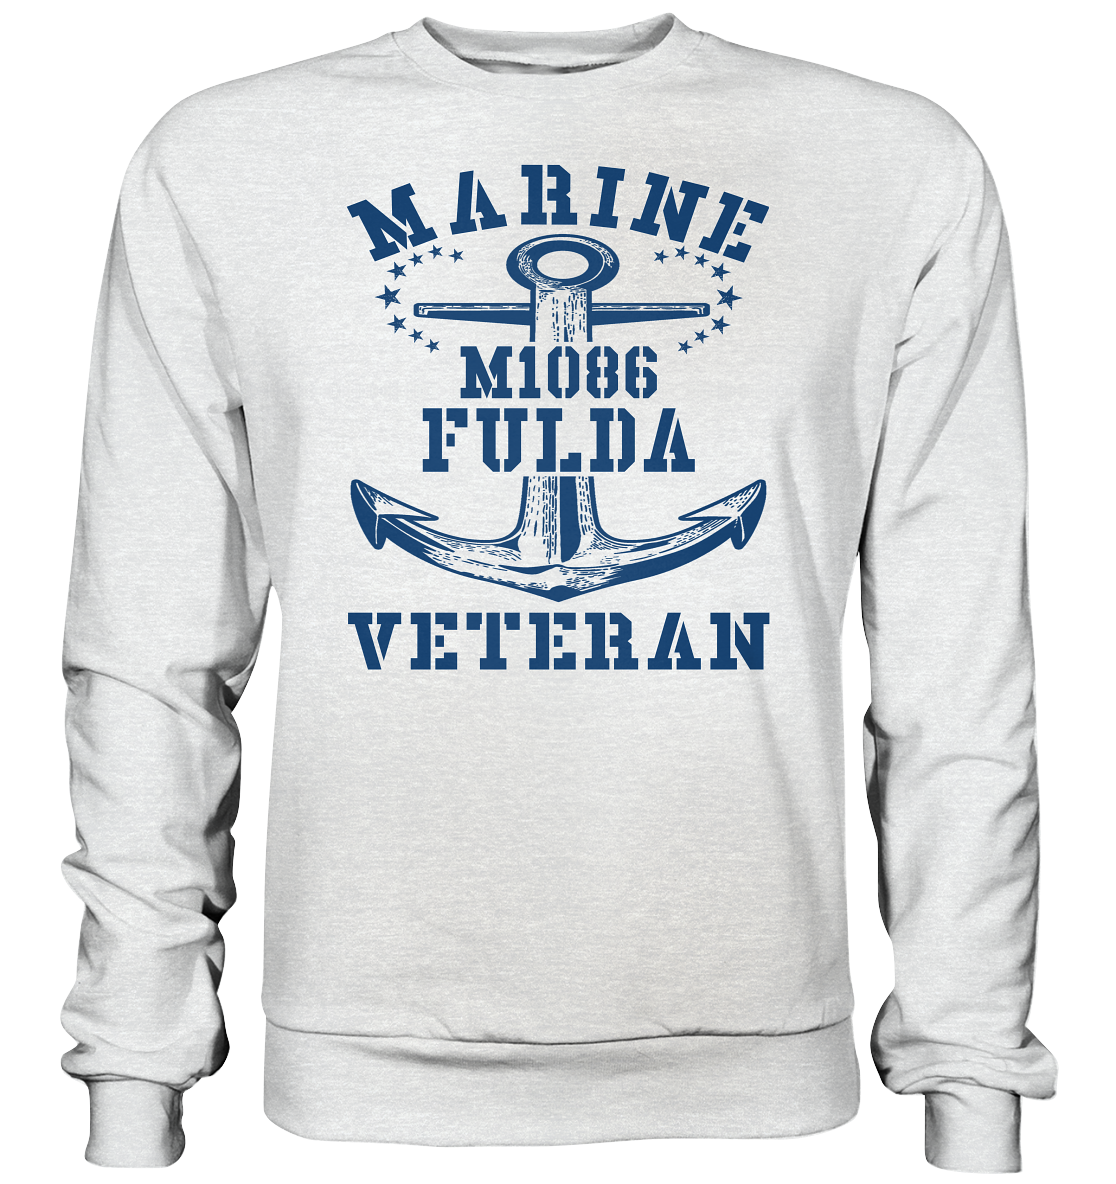 Marine Veteran M1086 FULDA - Premium Sweatshirt